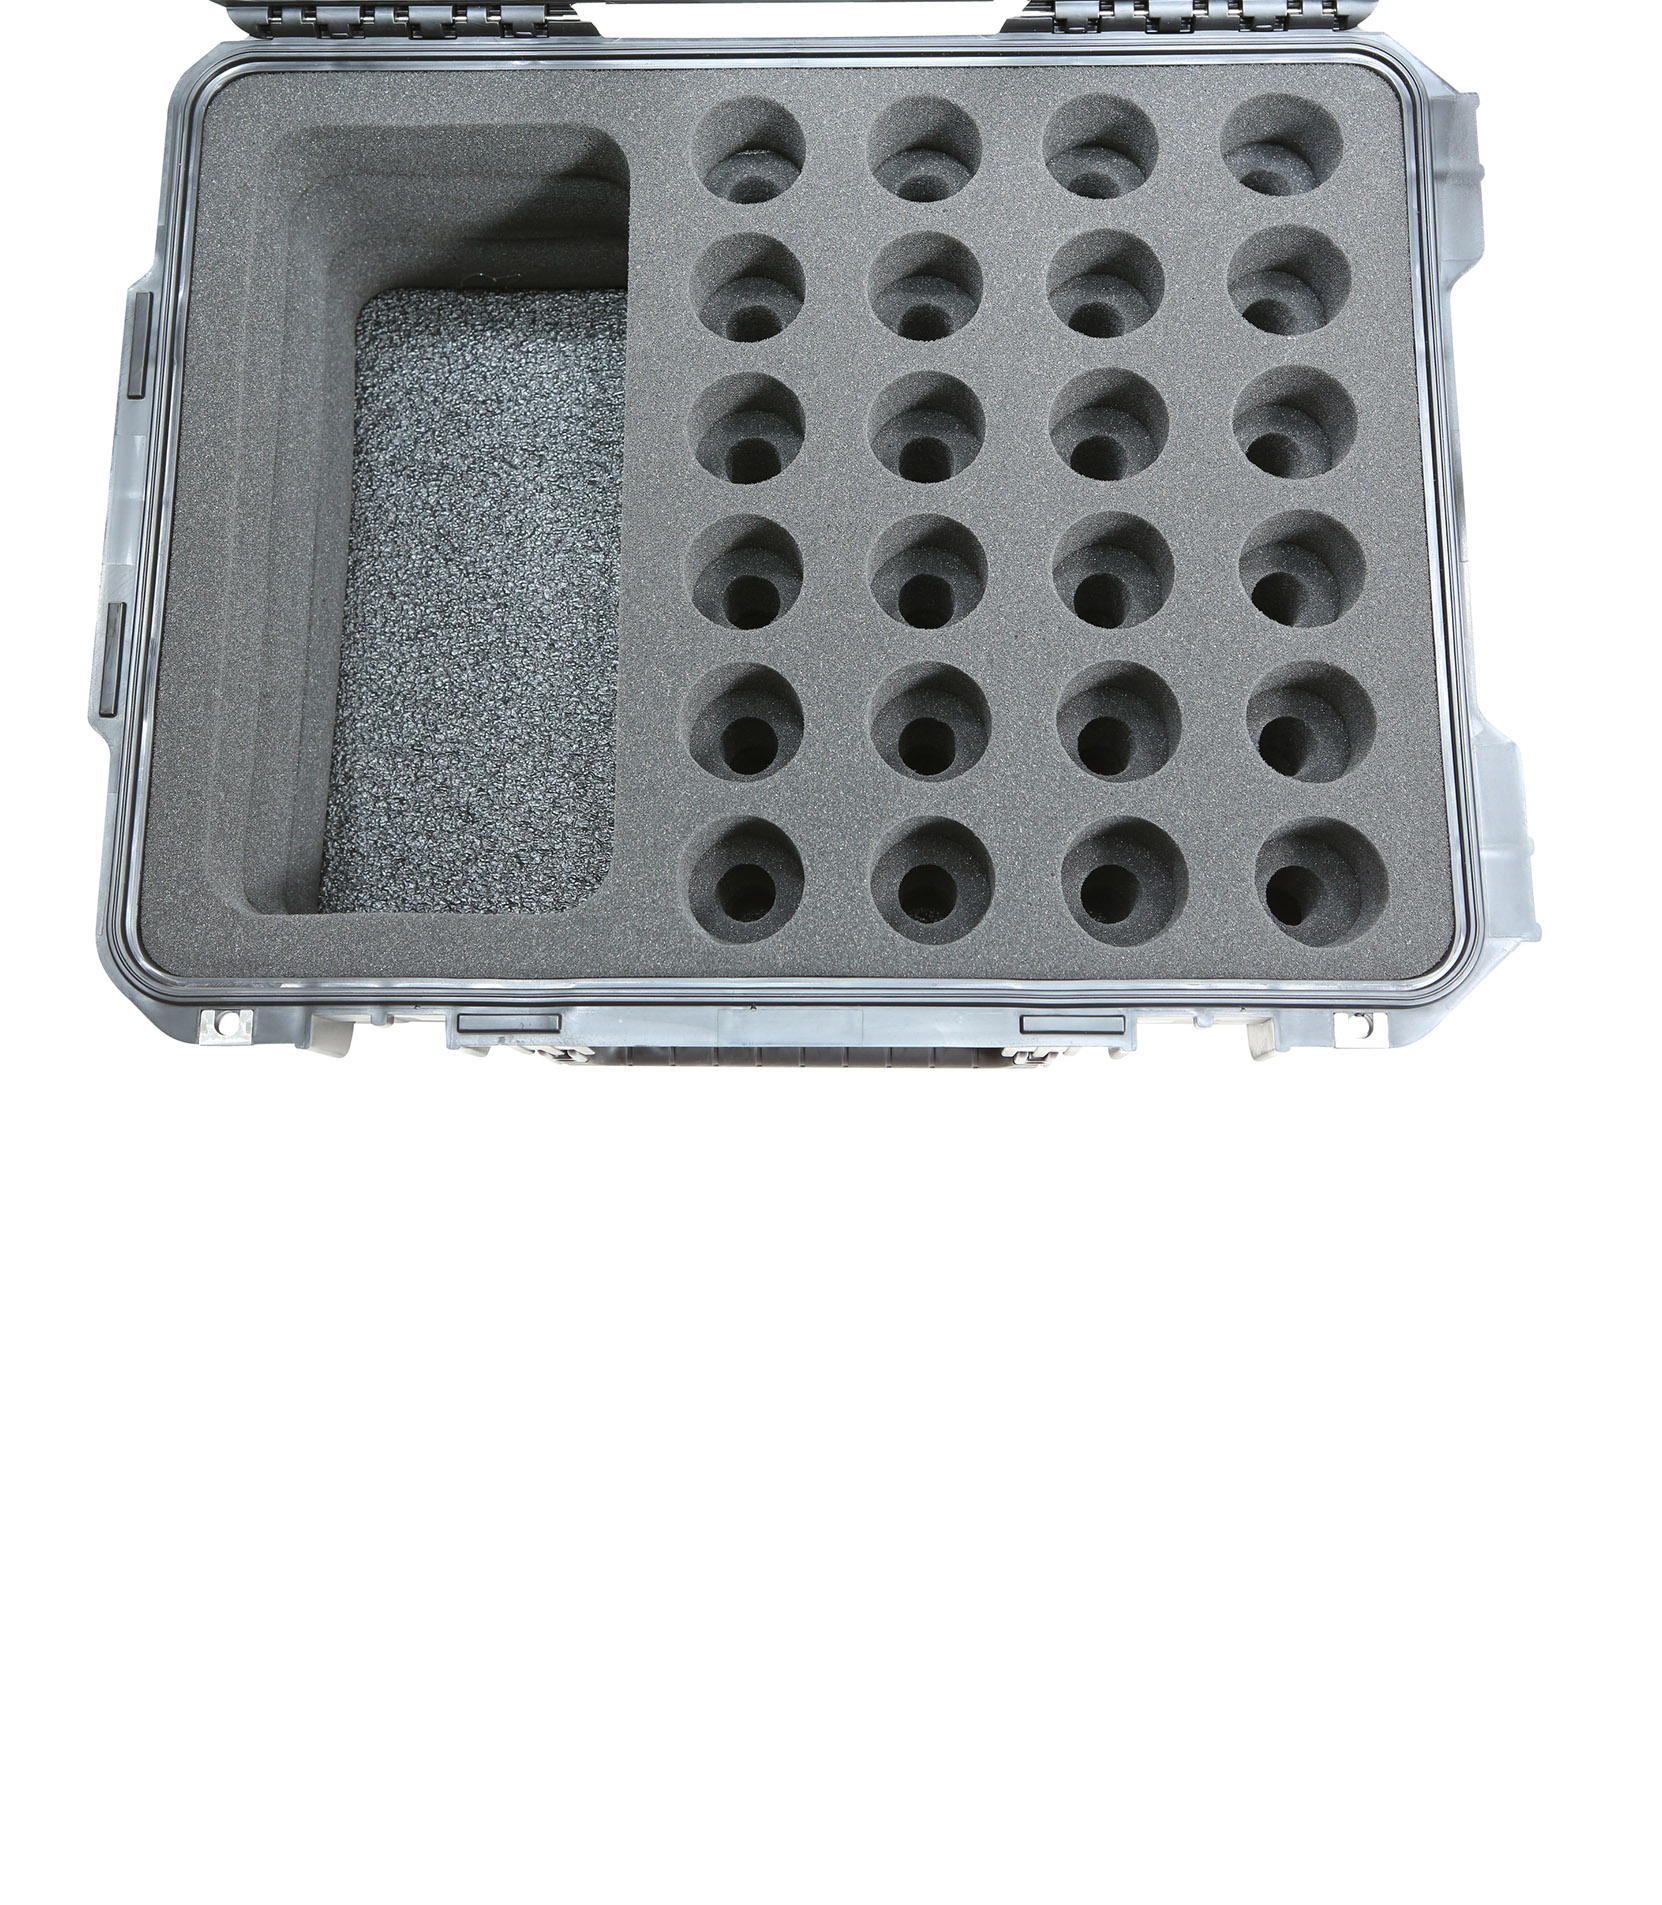 3I 2015 MC24 Injection Molded Case w Foam for 24 - 3I-2015-MC24 - Melody House Dubai, UAE